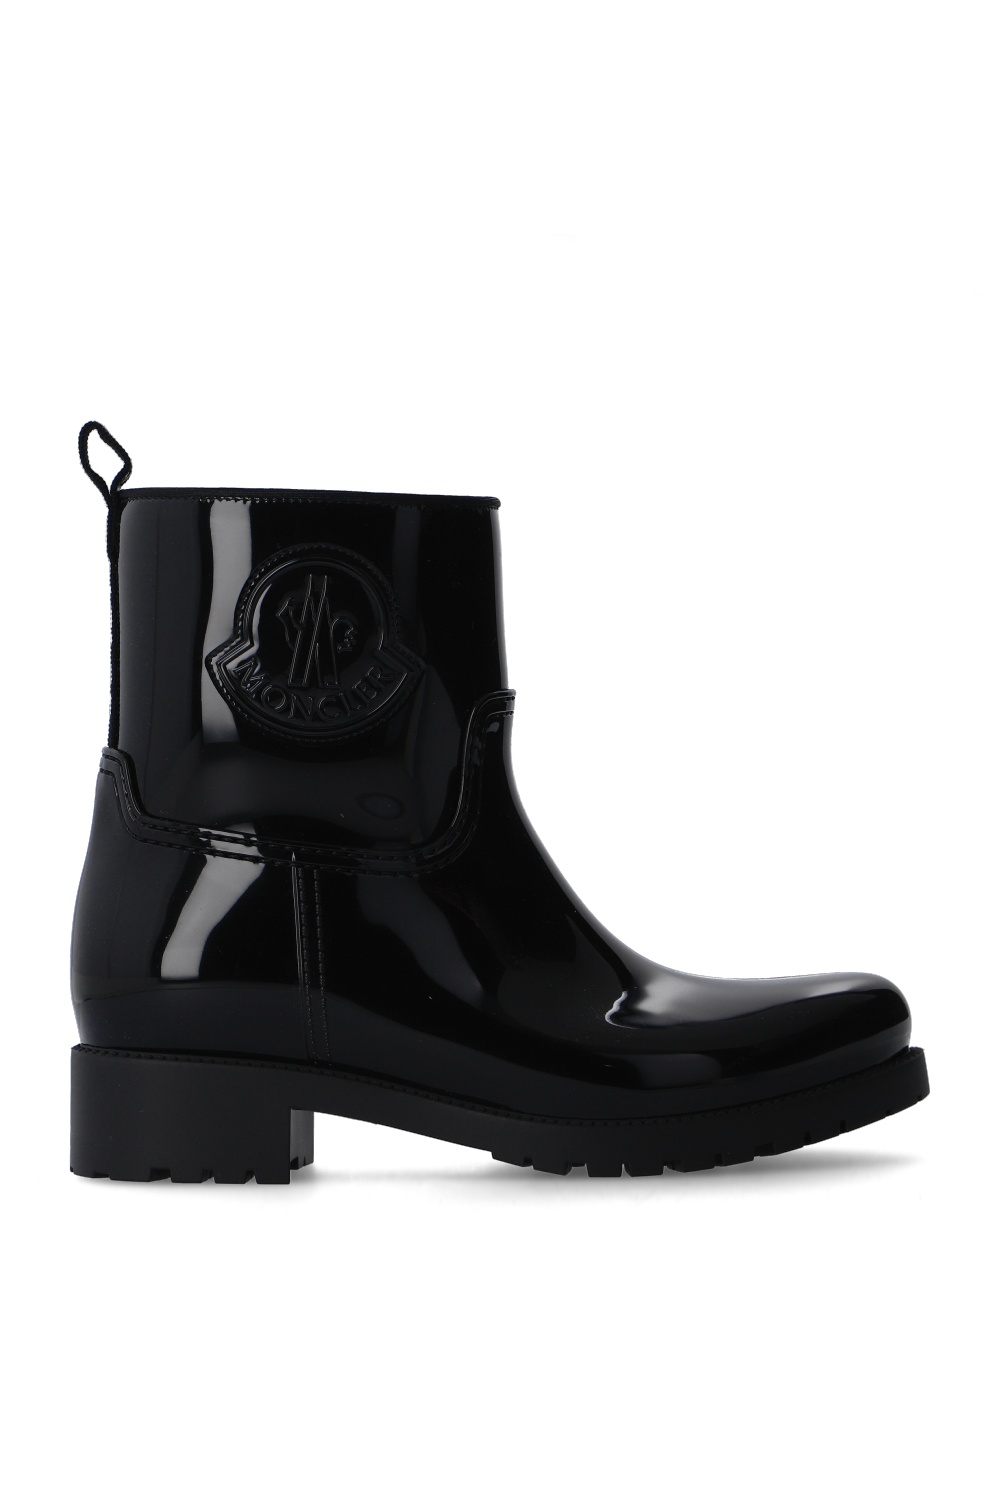 Moncler 'Ginette' rain boots | Women's Shoes | Vitkac